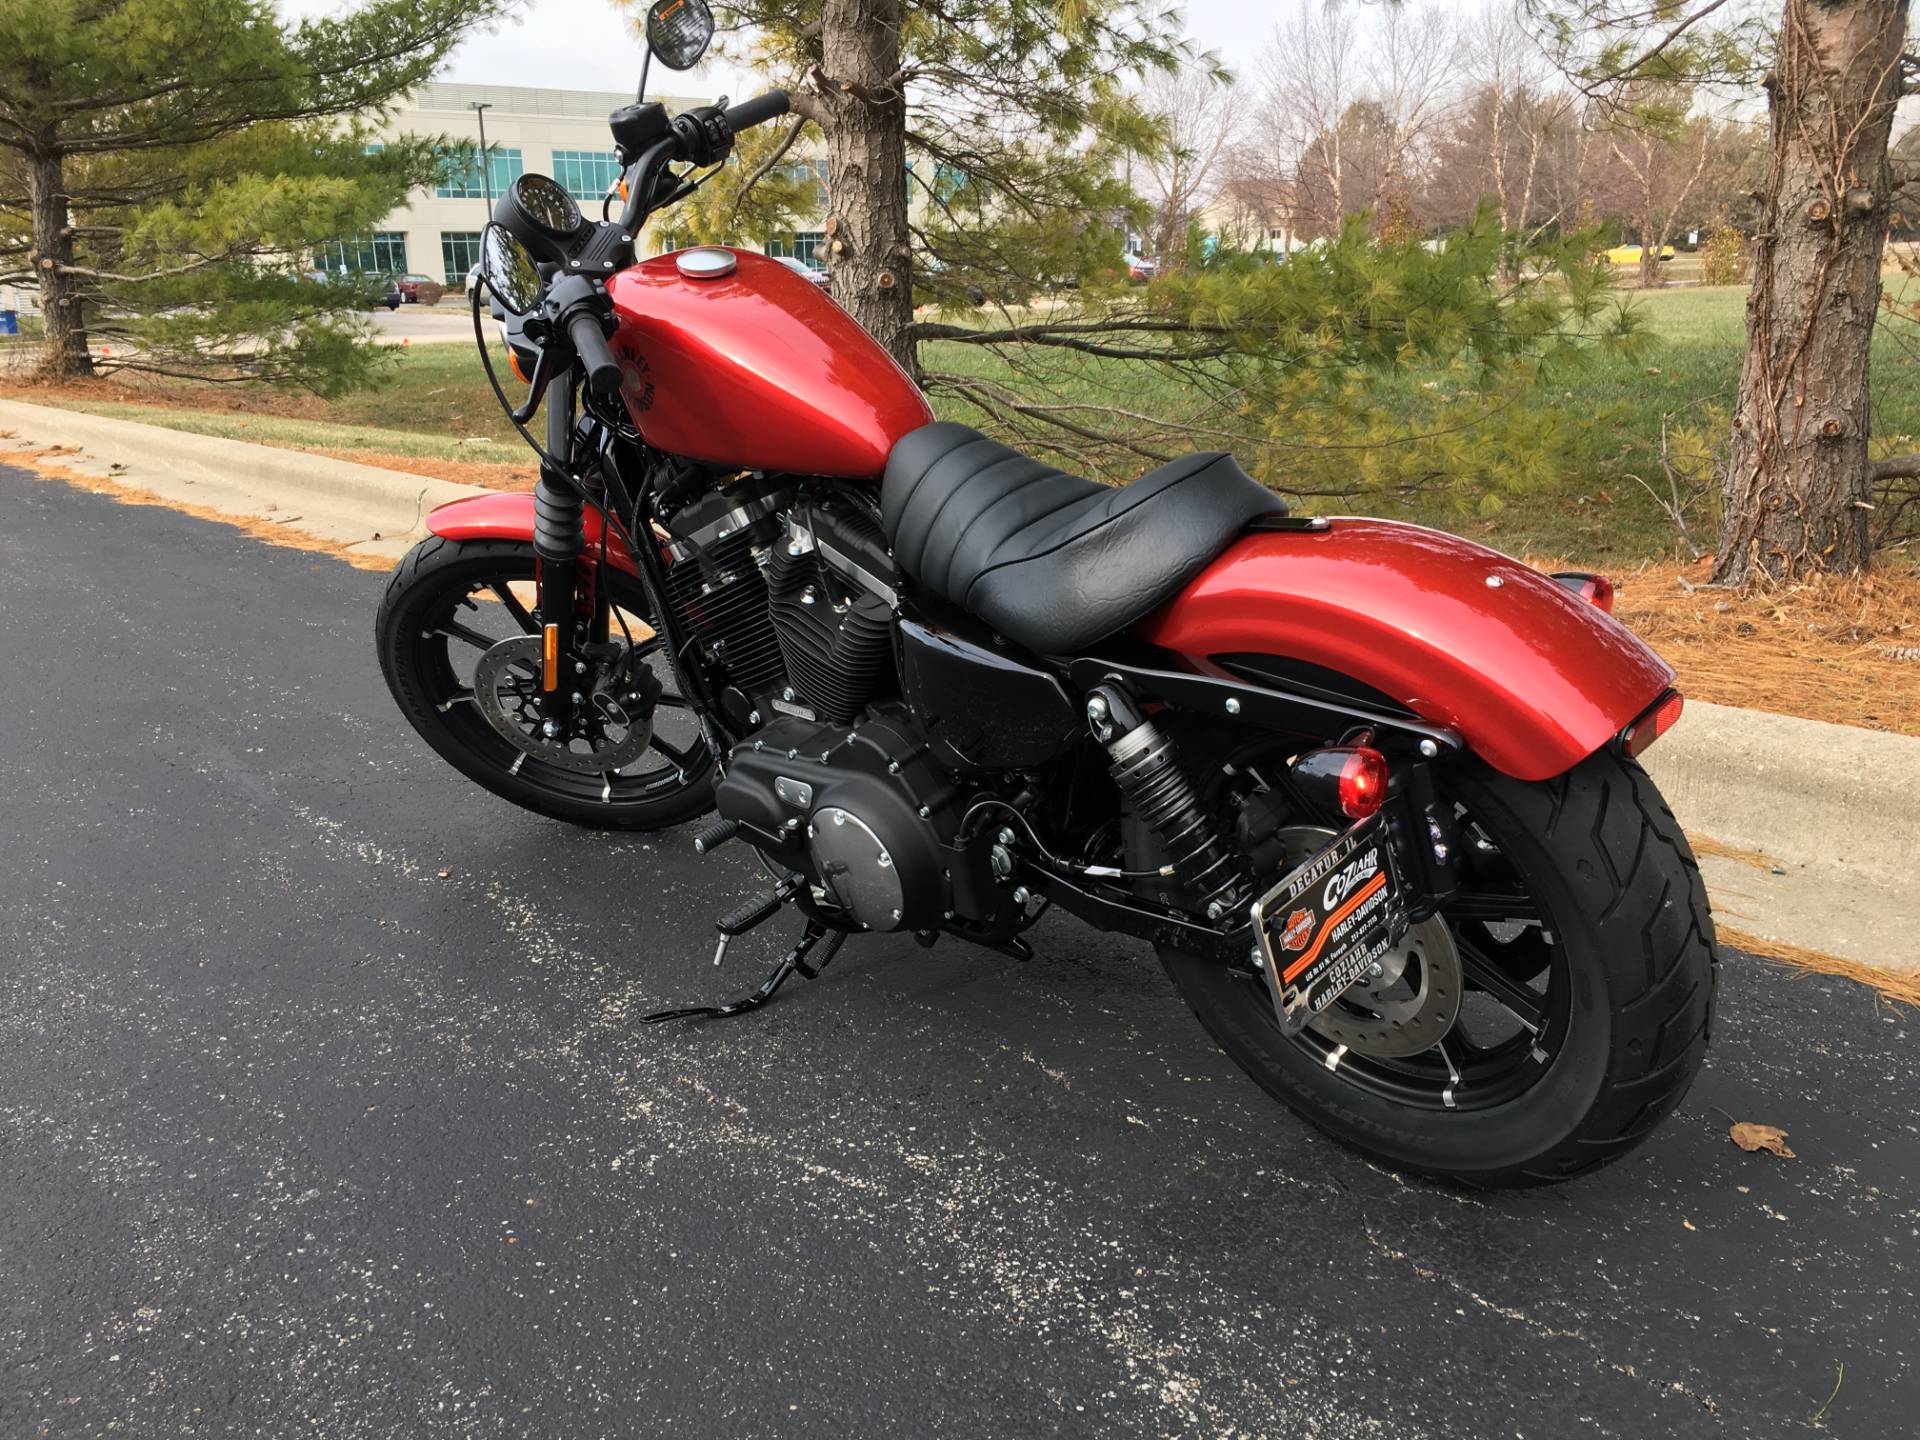 2019 Harley-davidson Iron 883 In Forsyth, Illinois - 883 Harley Davidson 2019 Iron 883 , HD Wallpaper & Backgrounds